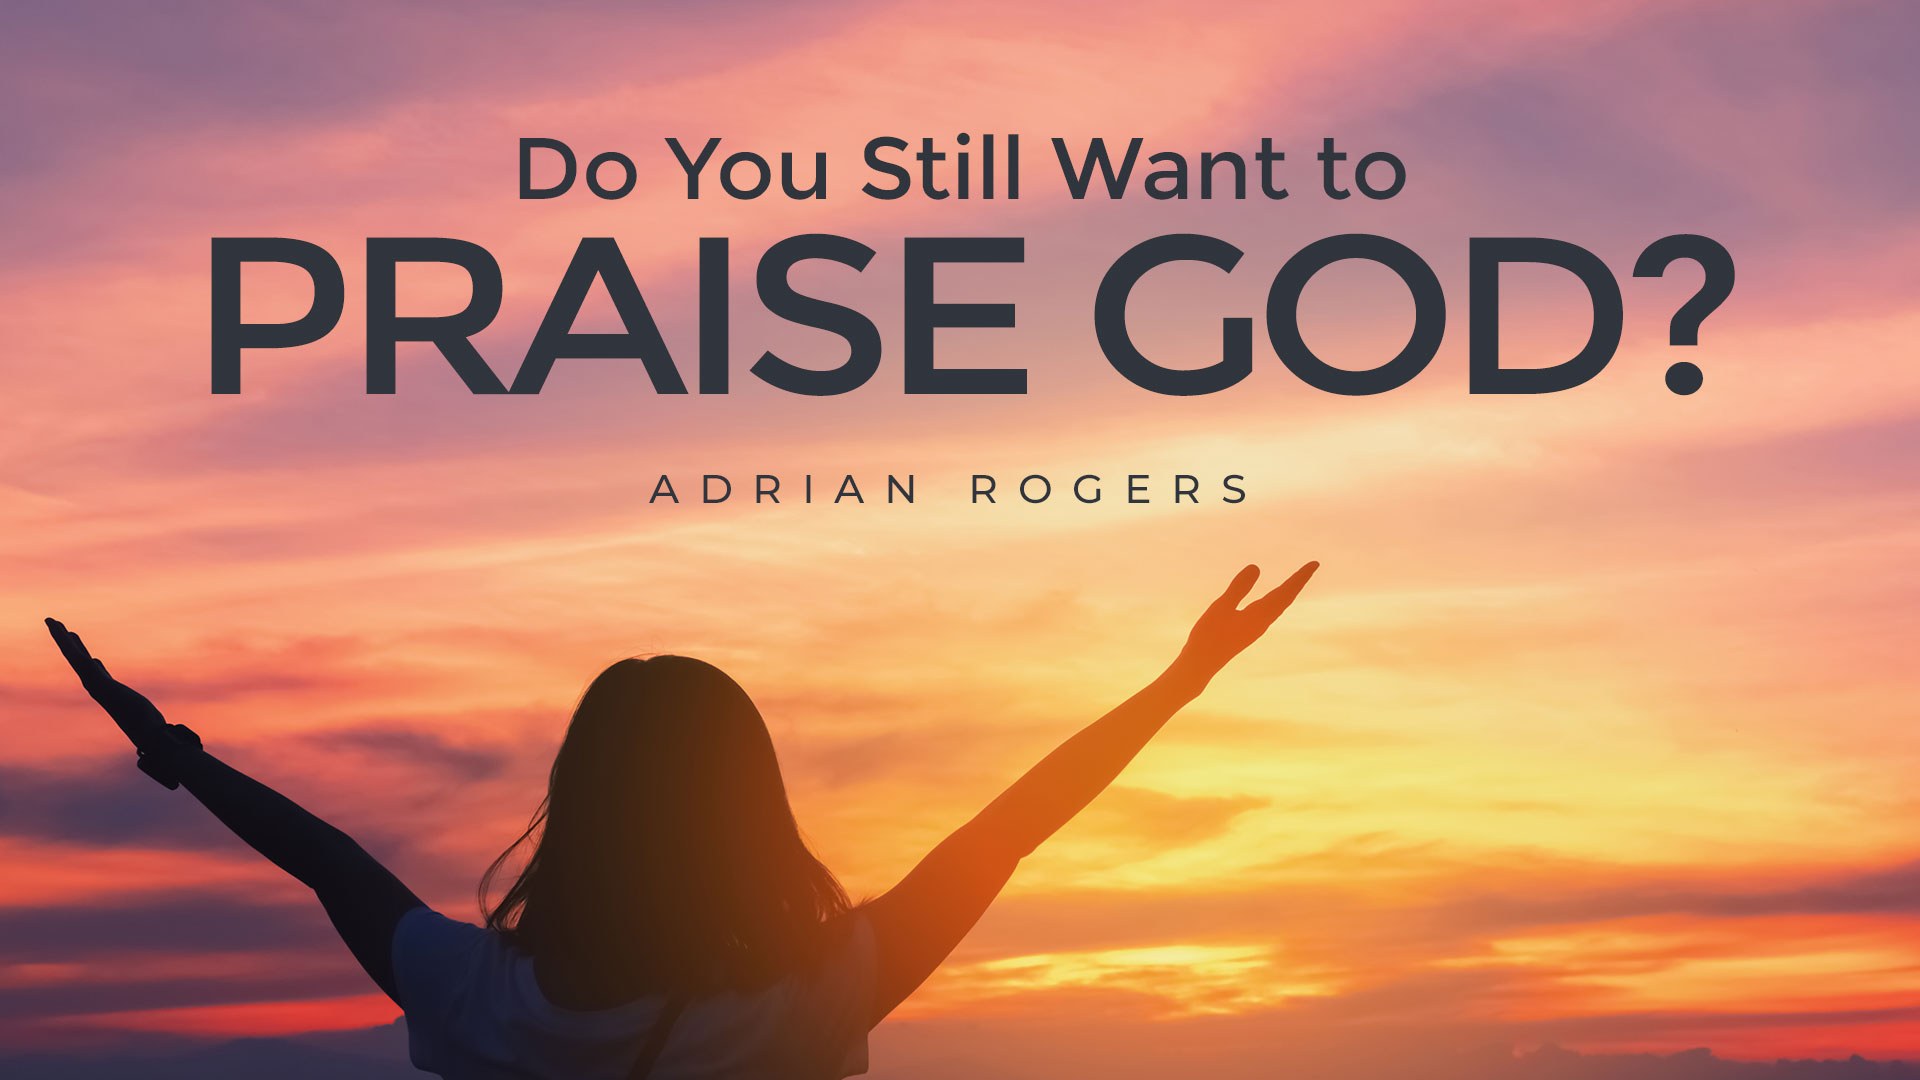 reasons to praise god